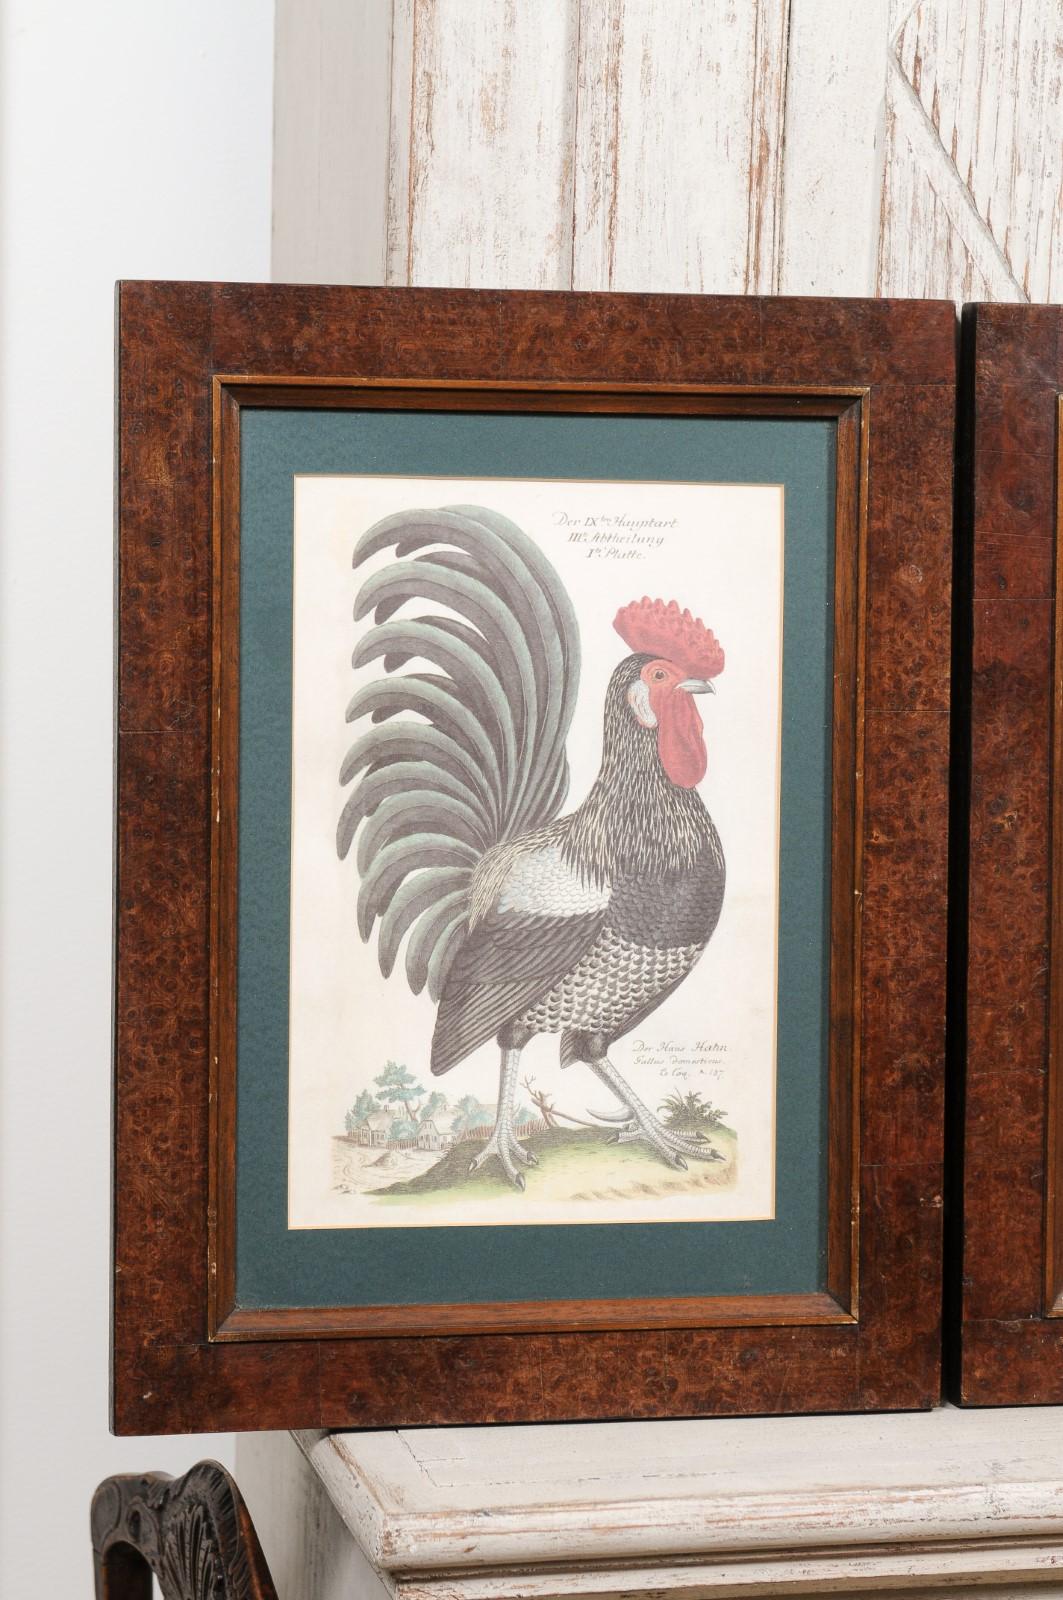 Turn of the Century German Cockerel Prints in Burr Walnut Frames, Set of Four For Sale 1